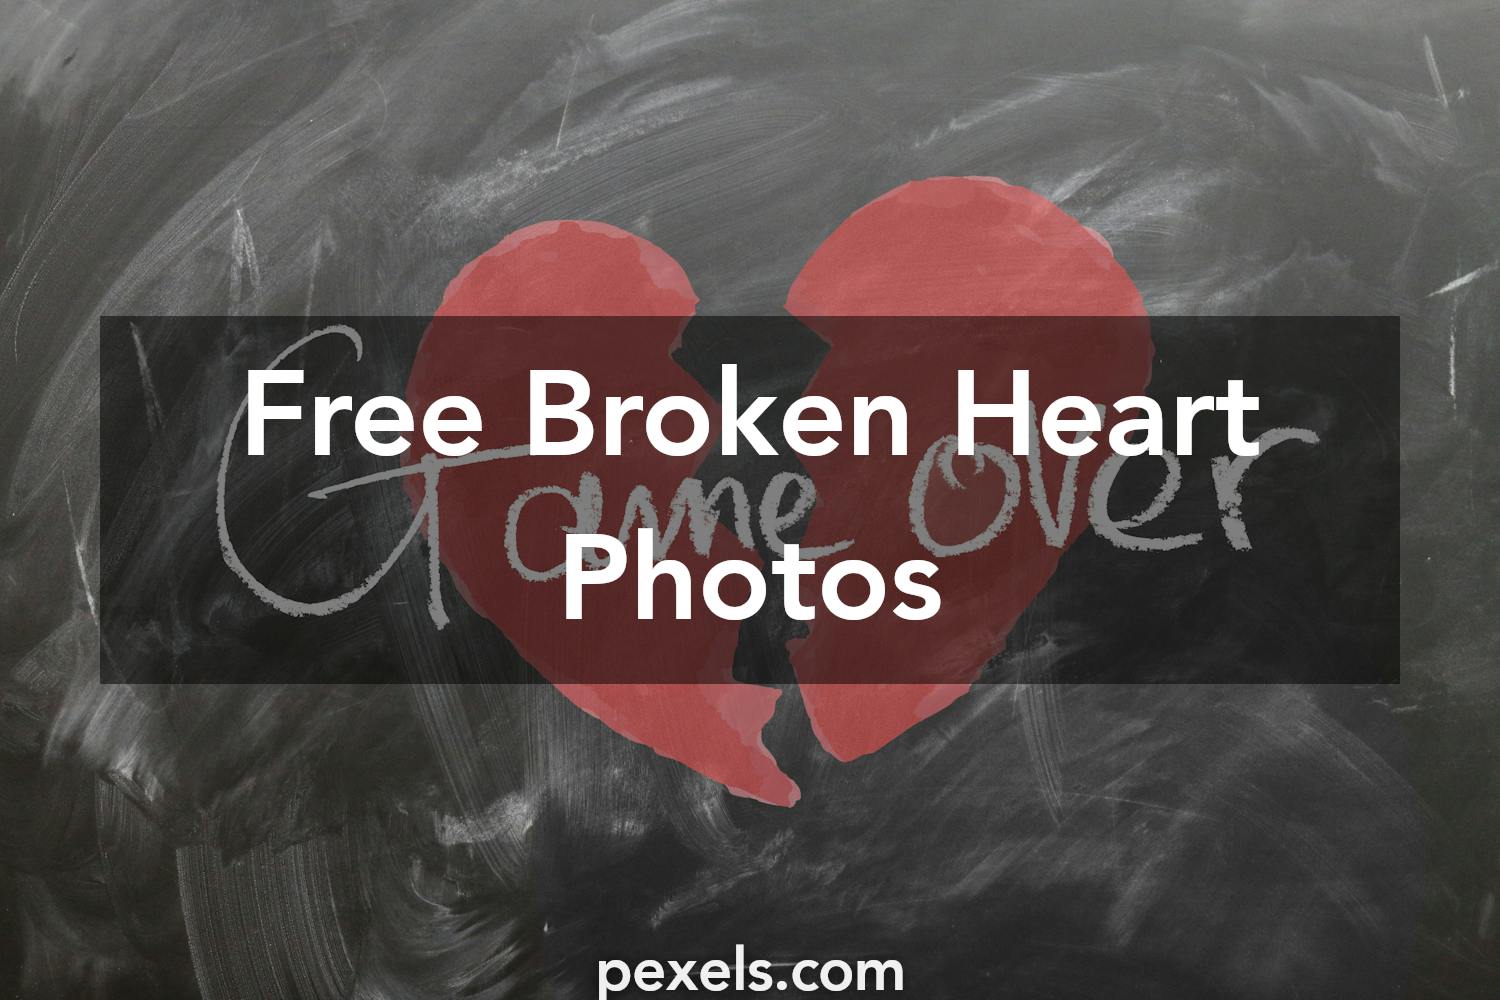 500 Great Broken Heart Photos Pexels Free Stock Photos